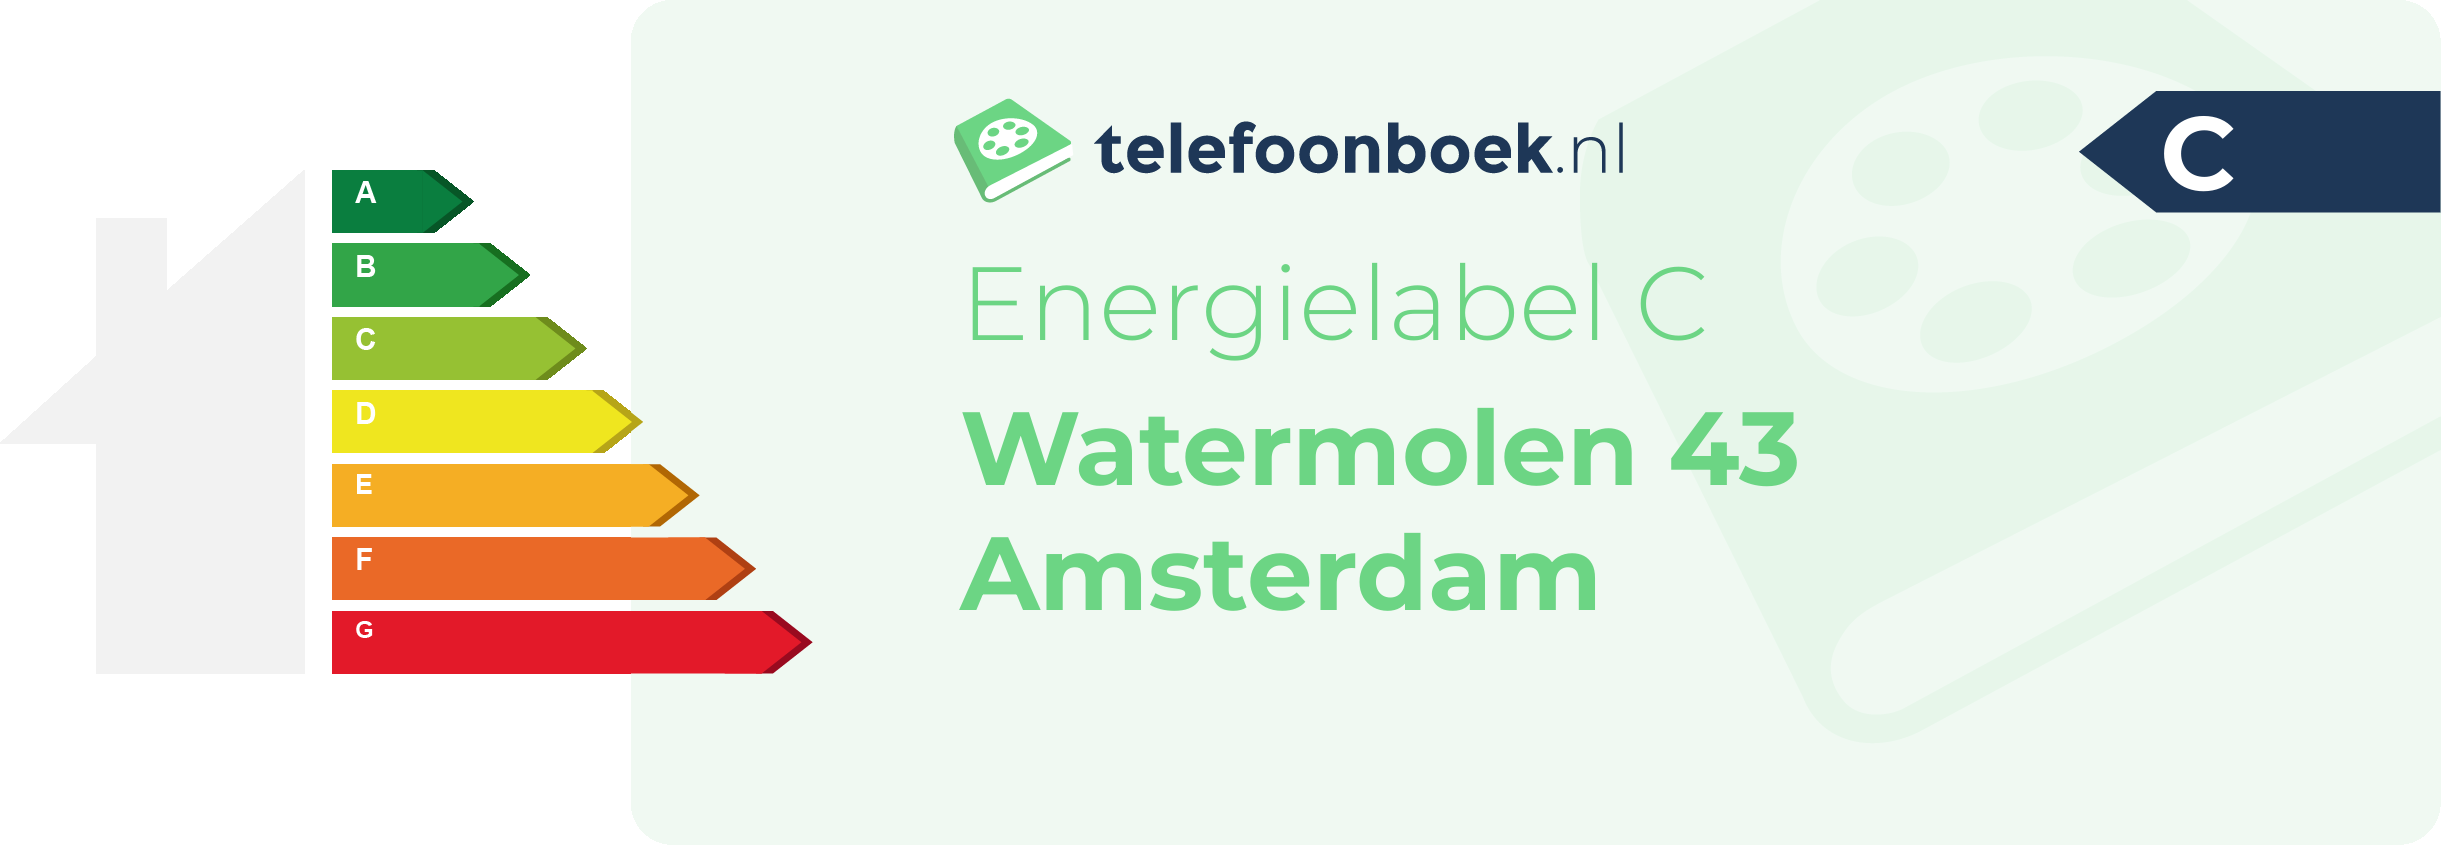 Energielabel Watermolen 43 Amsterdam